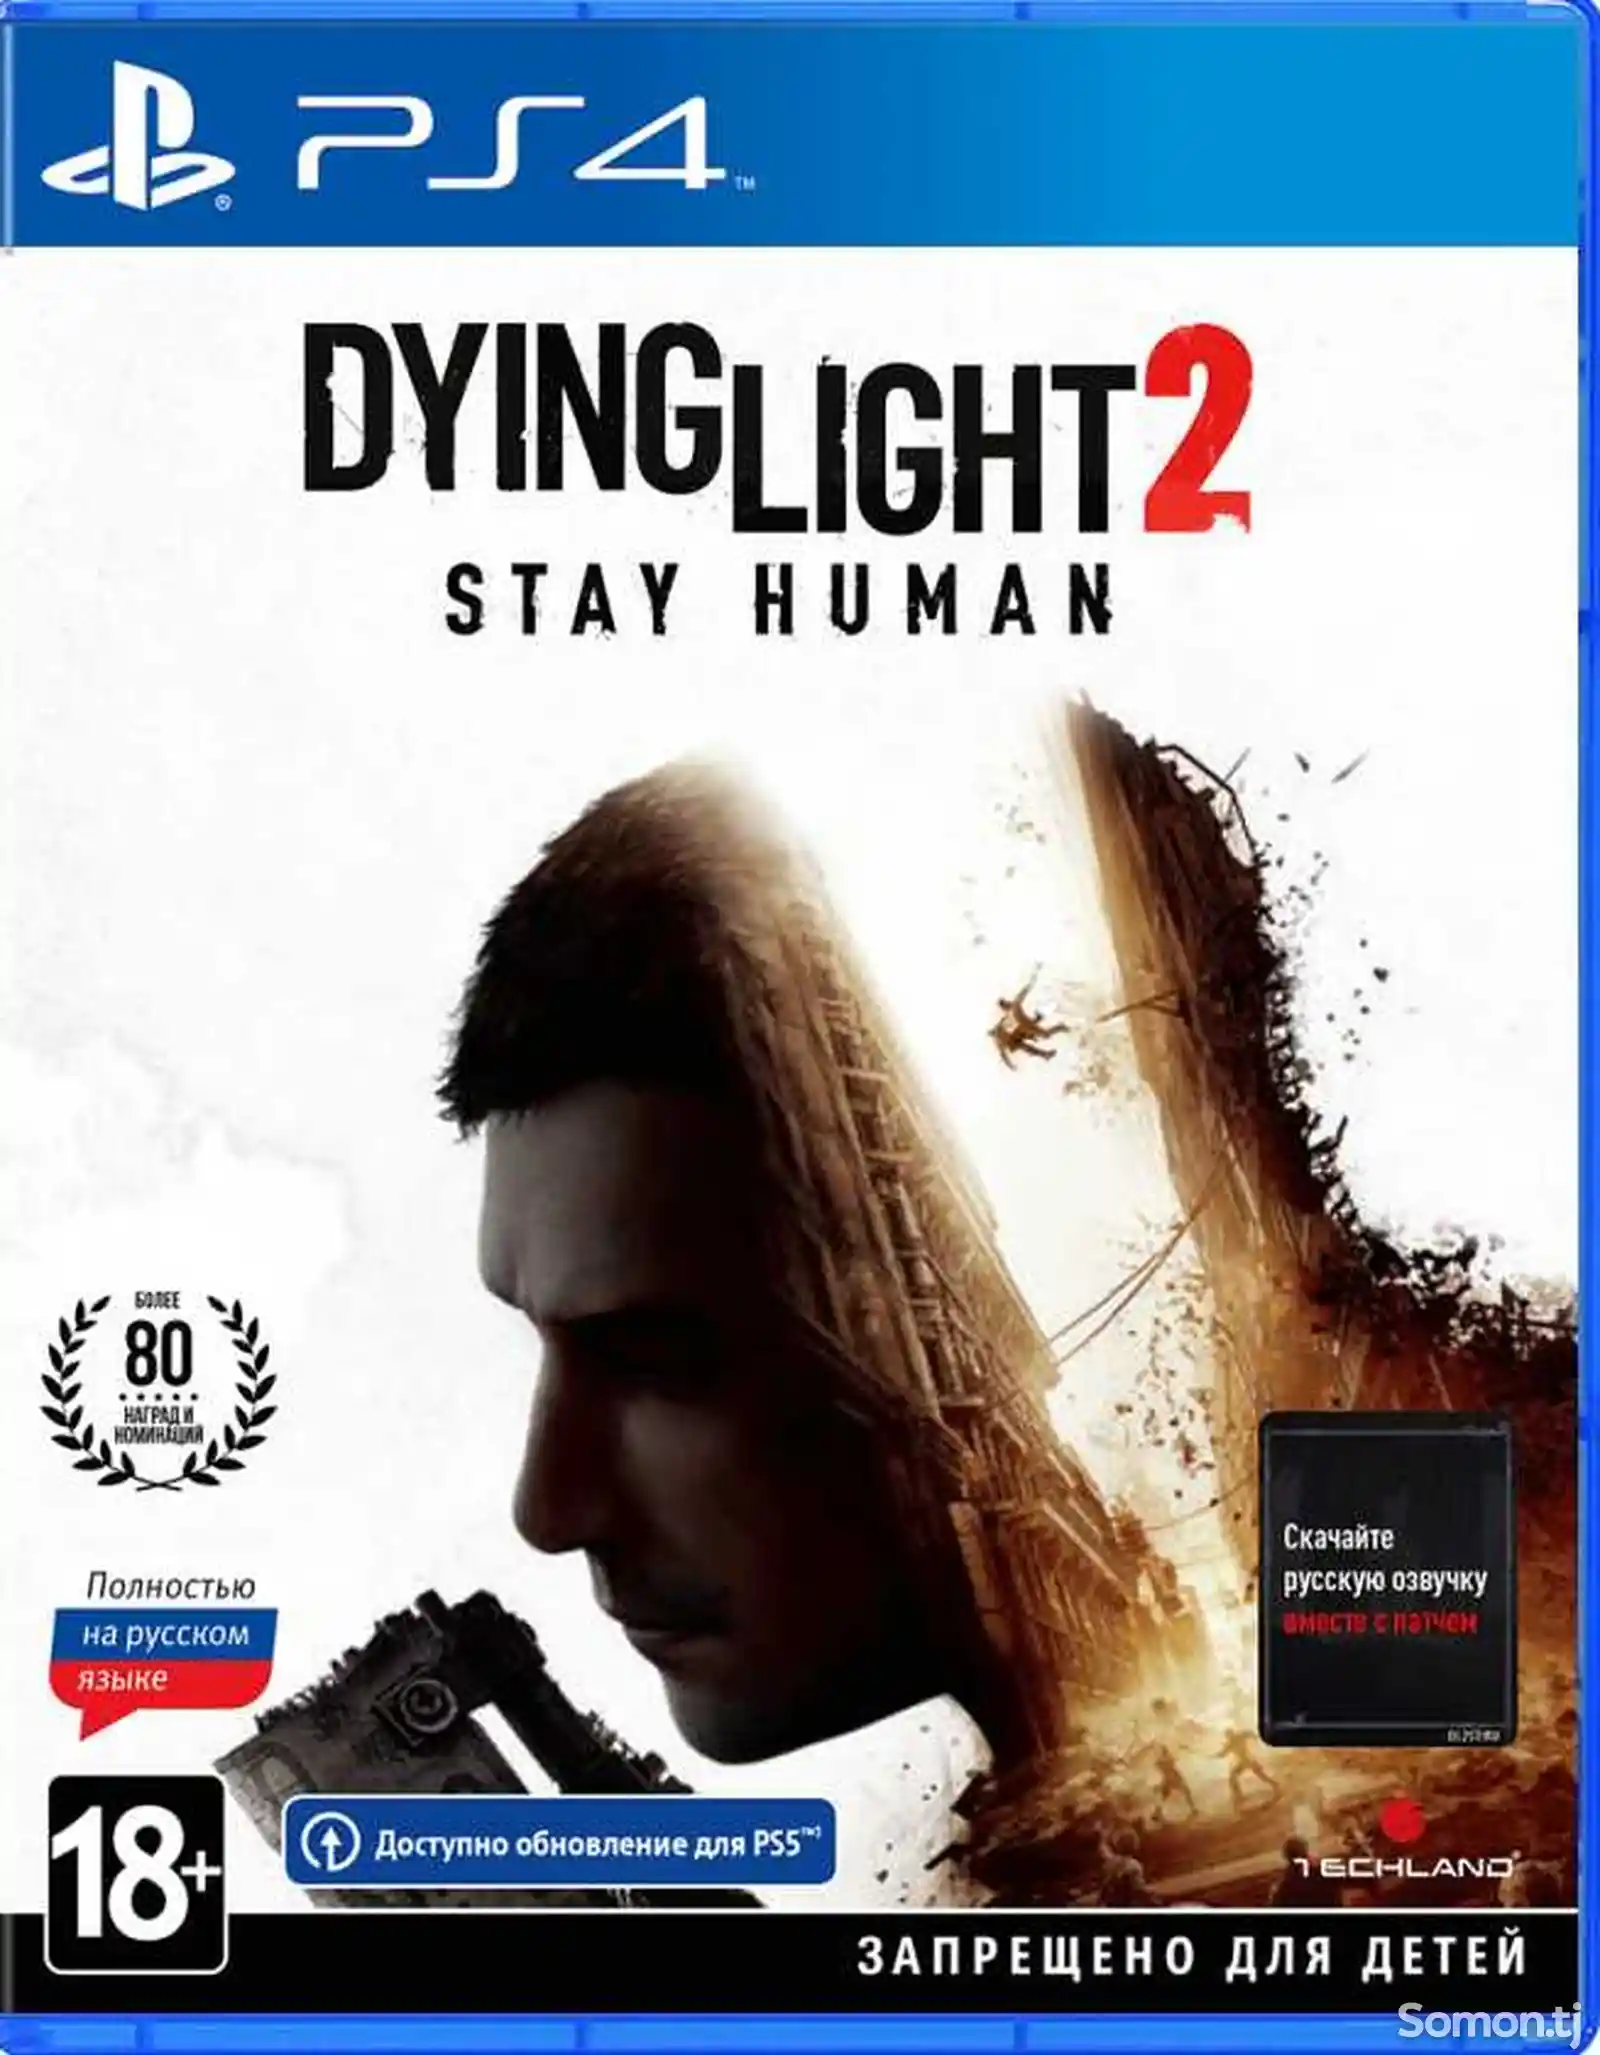 Игра Dying light 2 stay human для PS-4 / 5.05 / 6.72 / 7.02 / 7.55 / 9.00 /-1